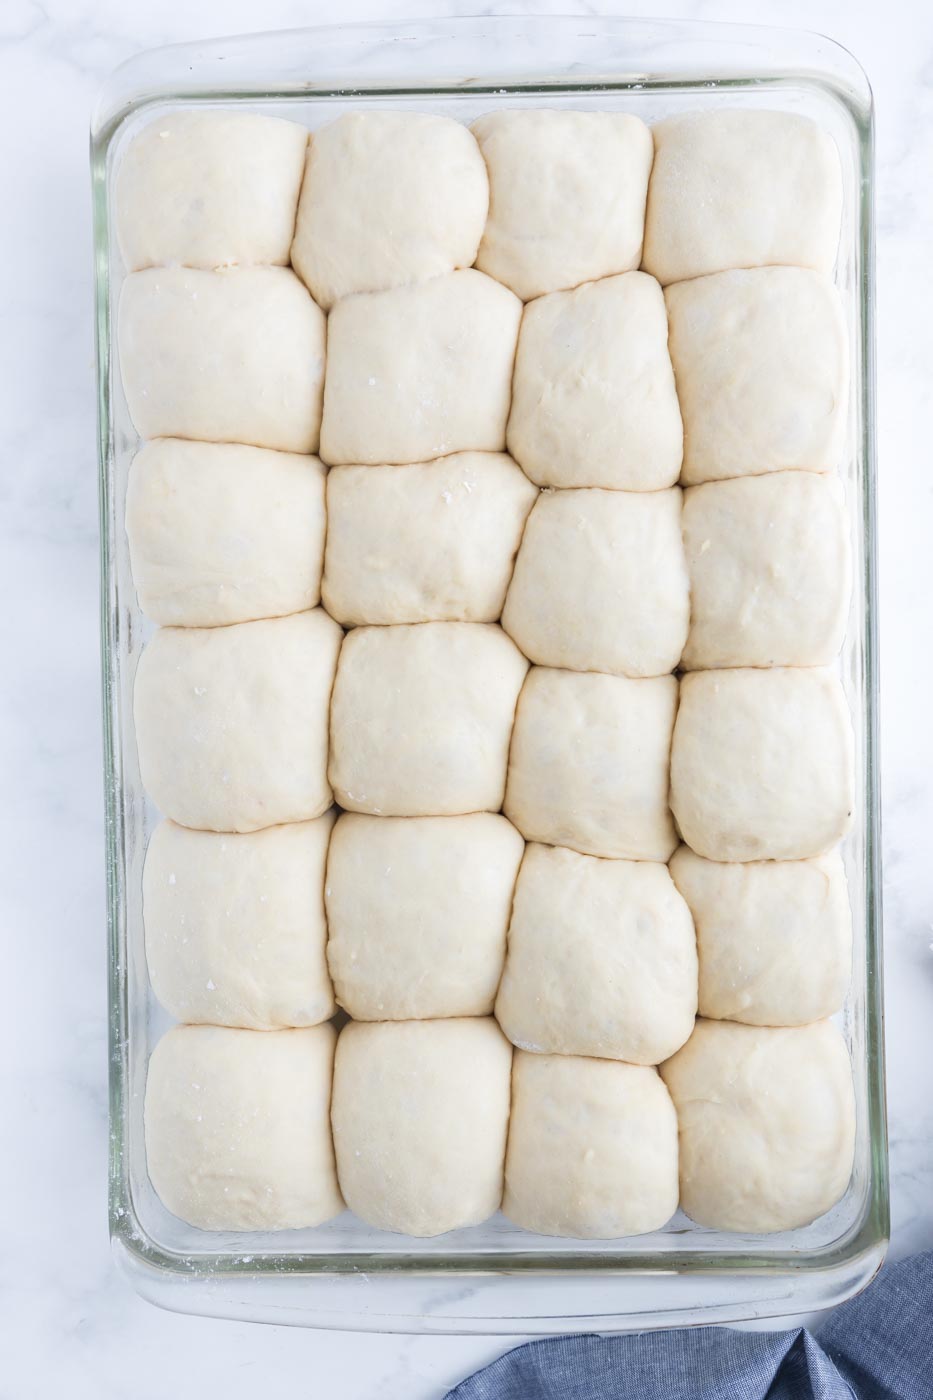 a pan of risen dinner rolls ready for baking